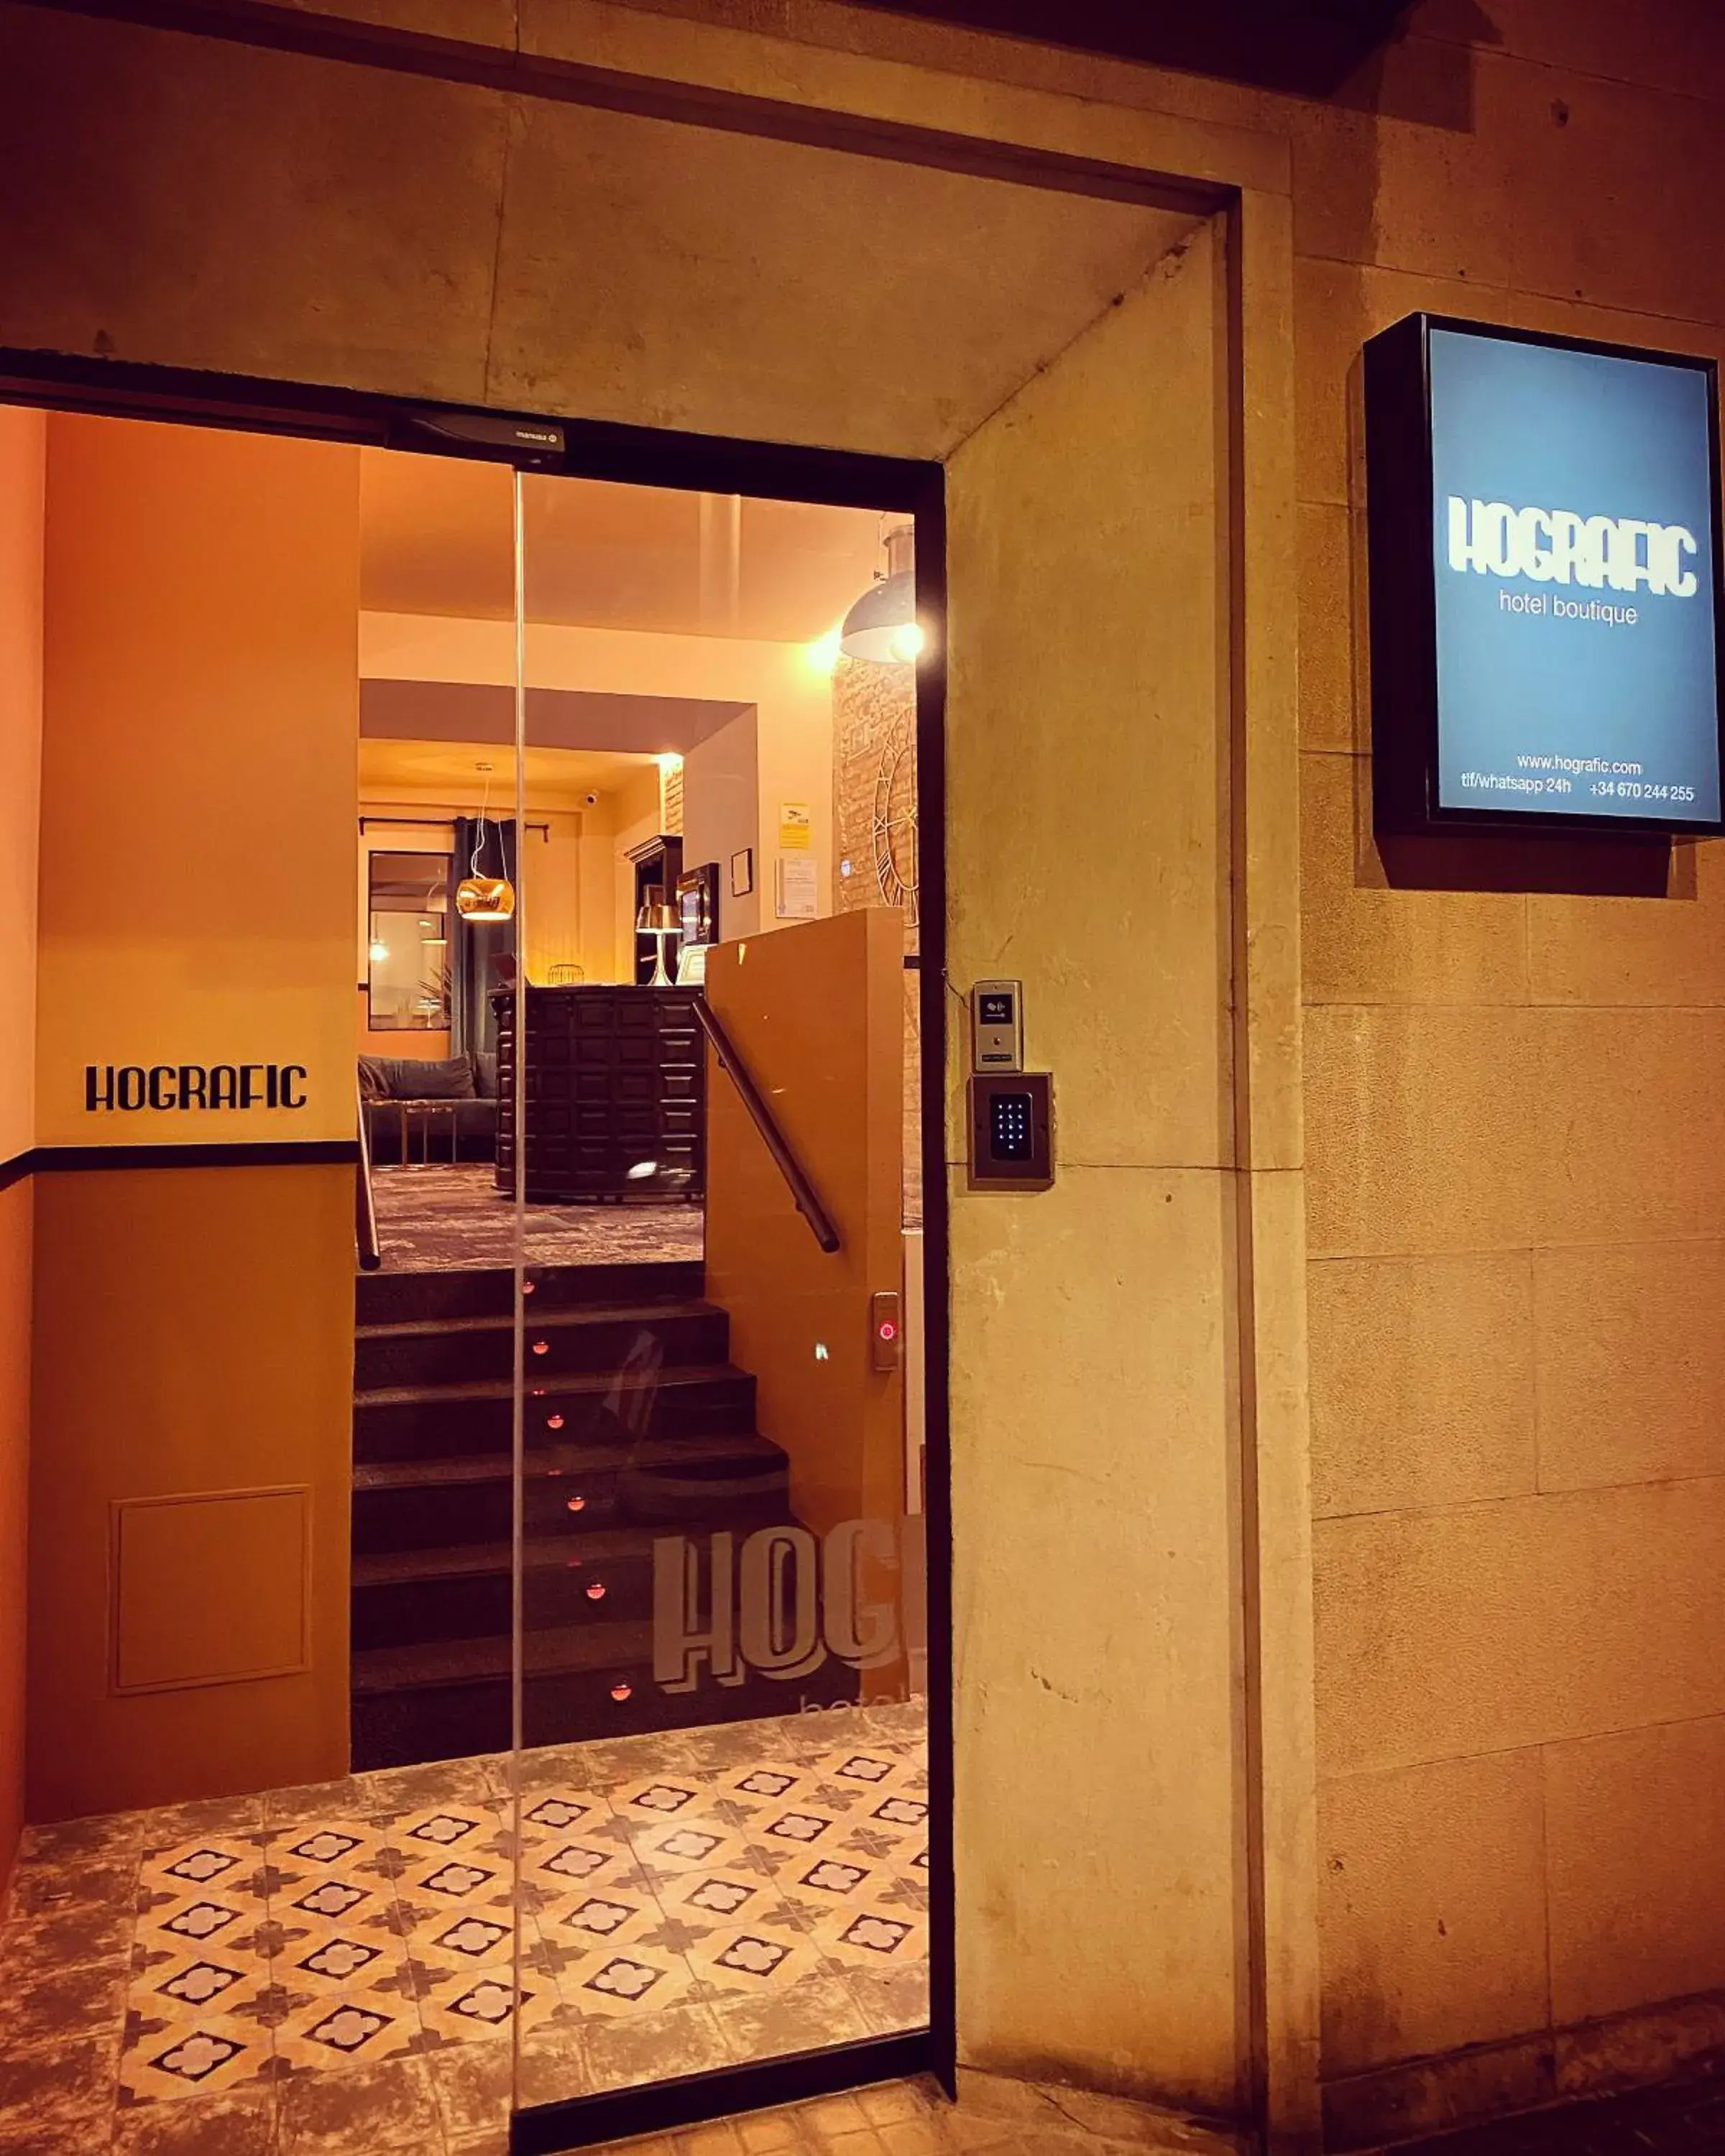 Facade/entrance, Kitchen/Kitchenette in HoGraFic hotel boutique